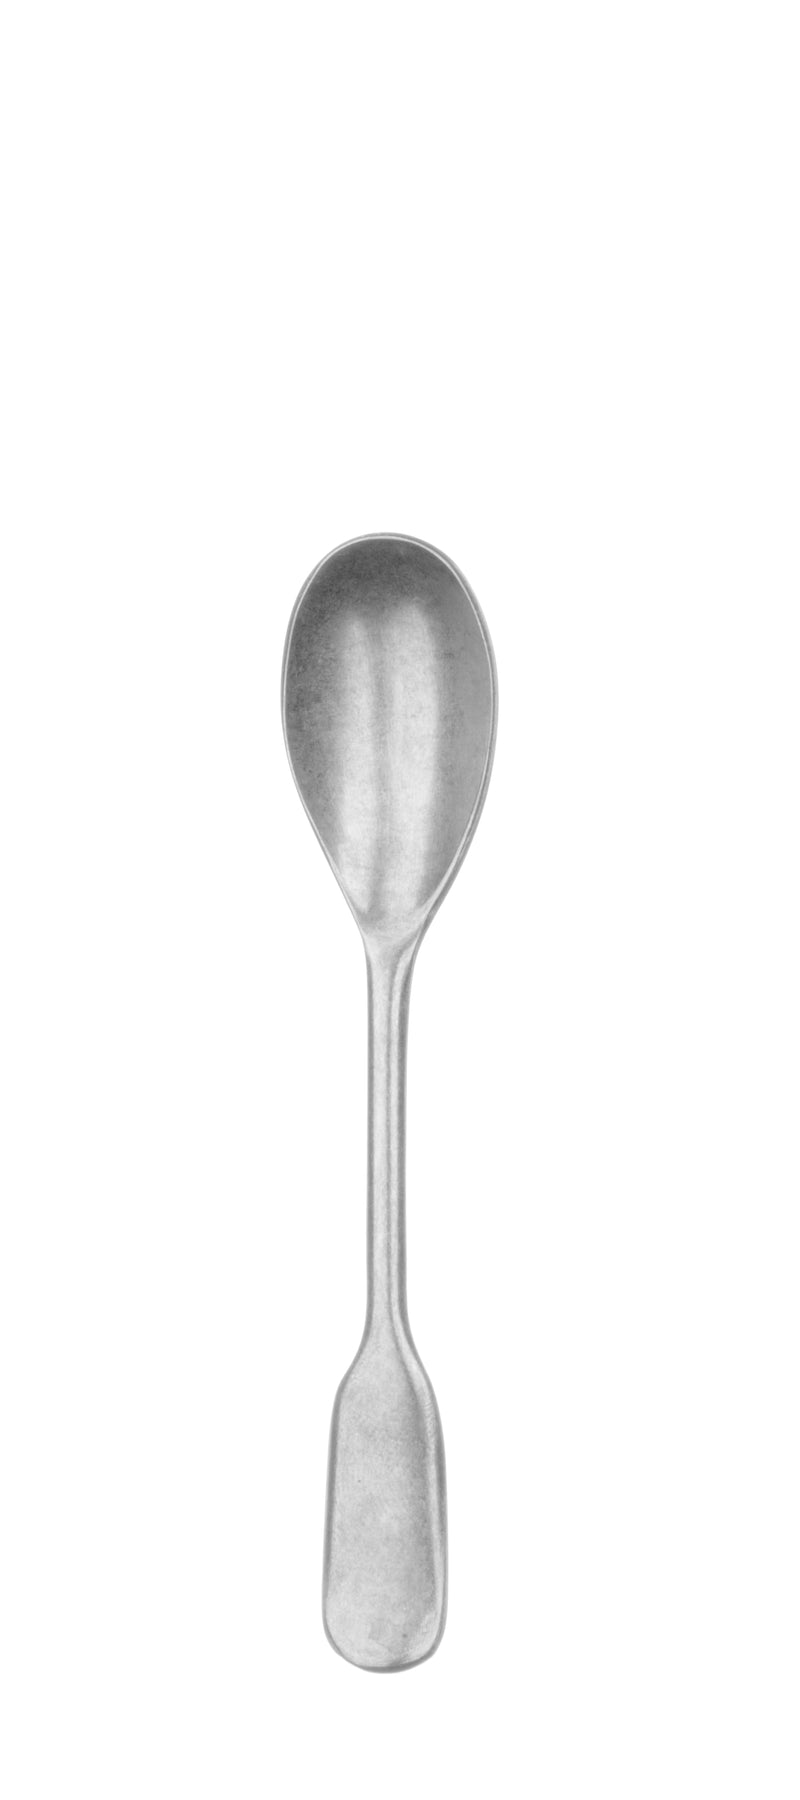 Charingworth Fiddle Vintage Coffee Spoon